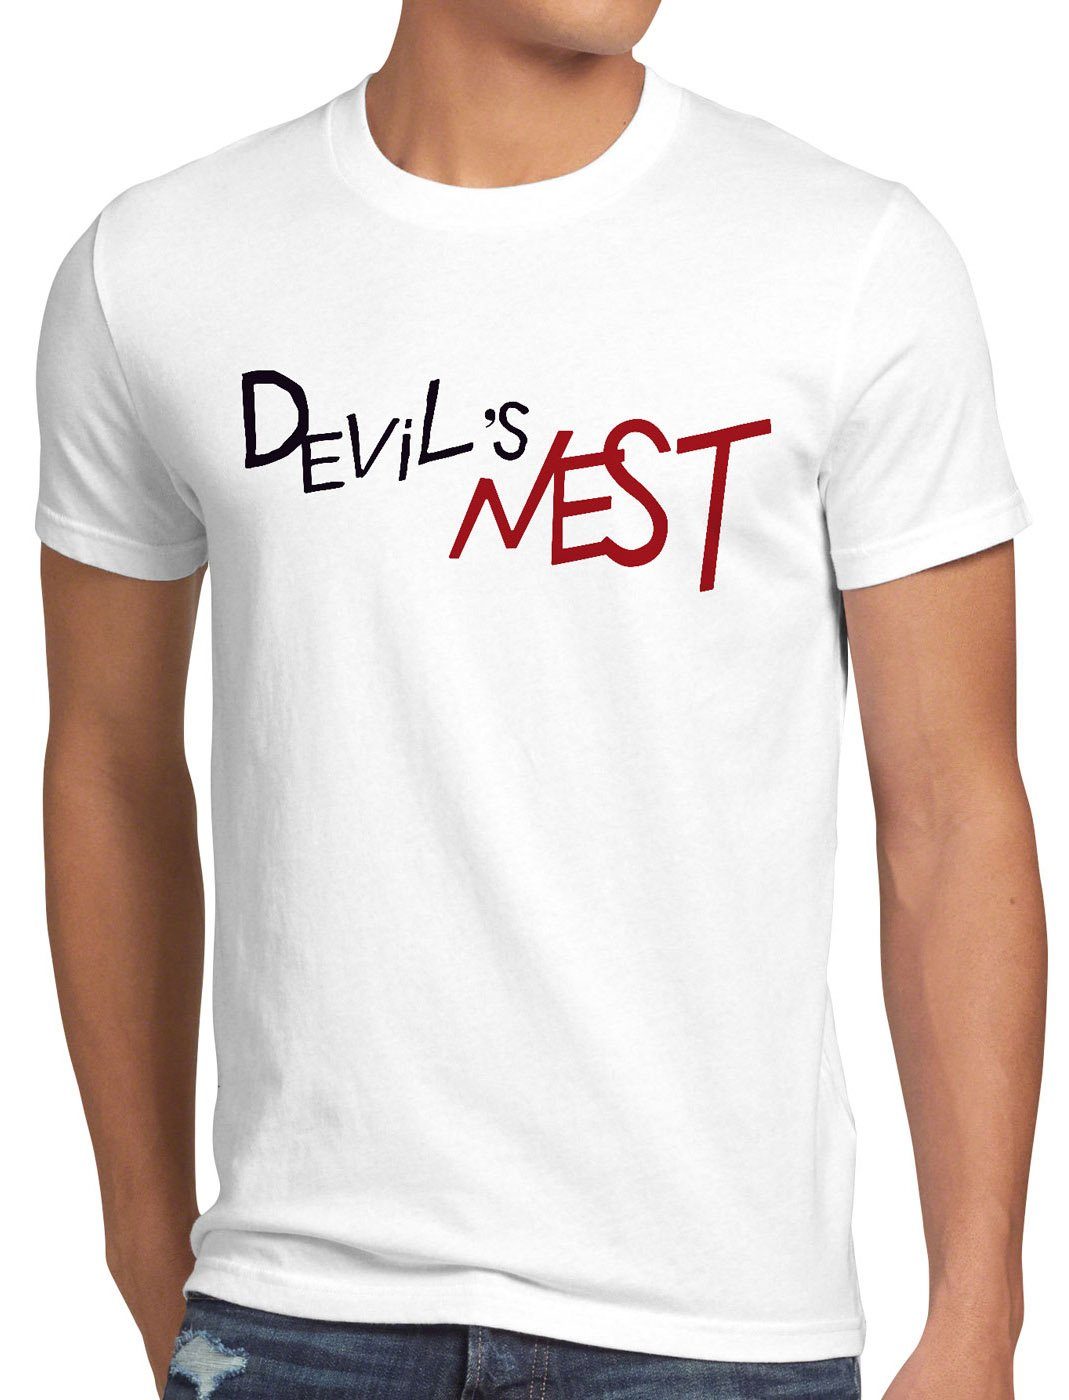 style3 Kostüm Print-Shirt Cosplay Alchemist Nest weiß Anime Fan-Shirt Jungen Herren T-Shirt Devils